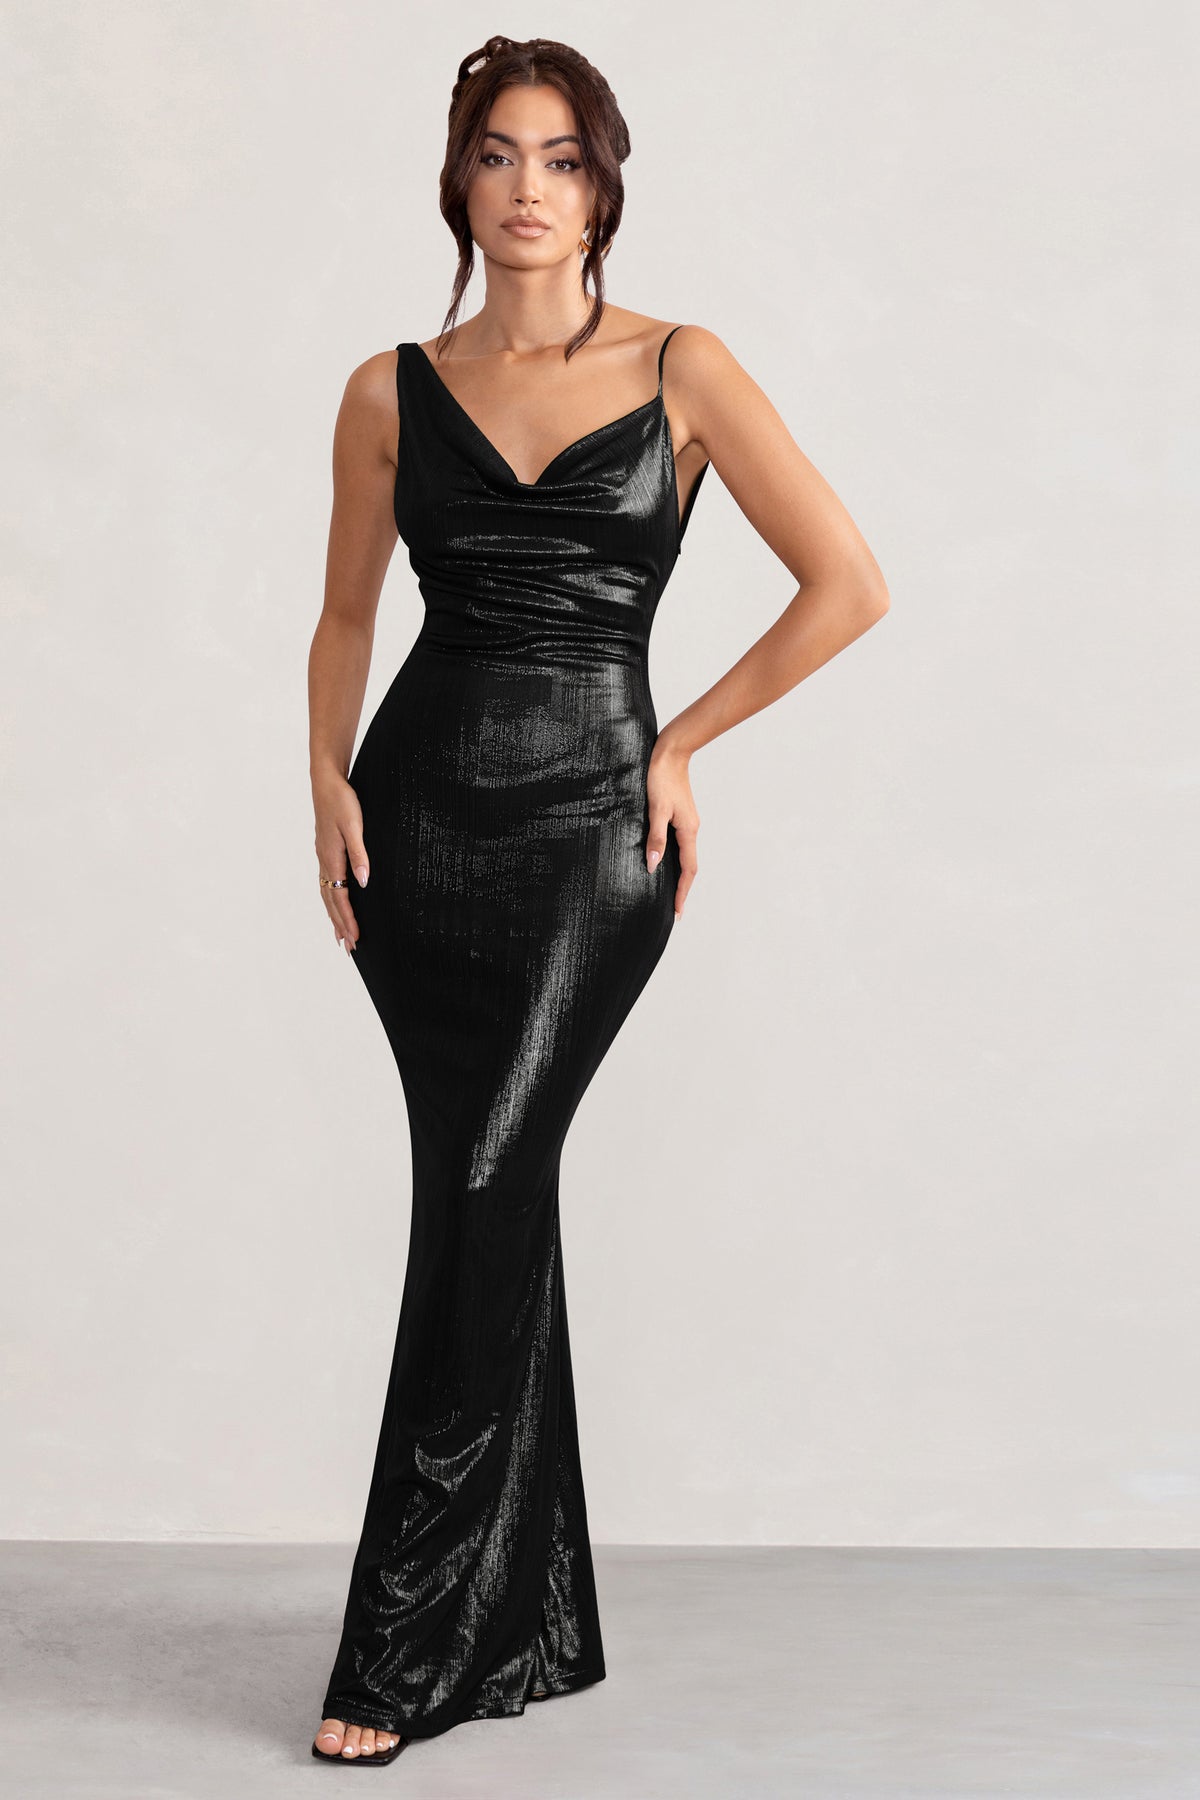 Photos: ब्लैक शिमरी गाउन में नजर आई श्वेता तिवारी , Long Leg को कुछ यूं  किया फ्लॉन्ट | Television actress shweta tiwari dressed up black shimmer  gown